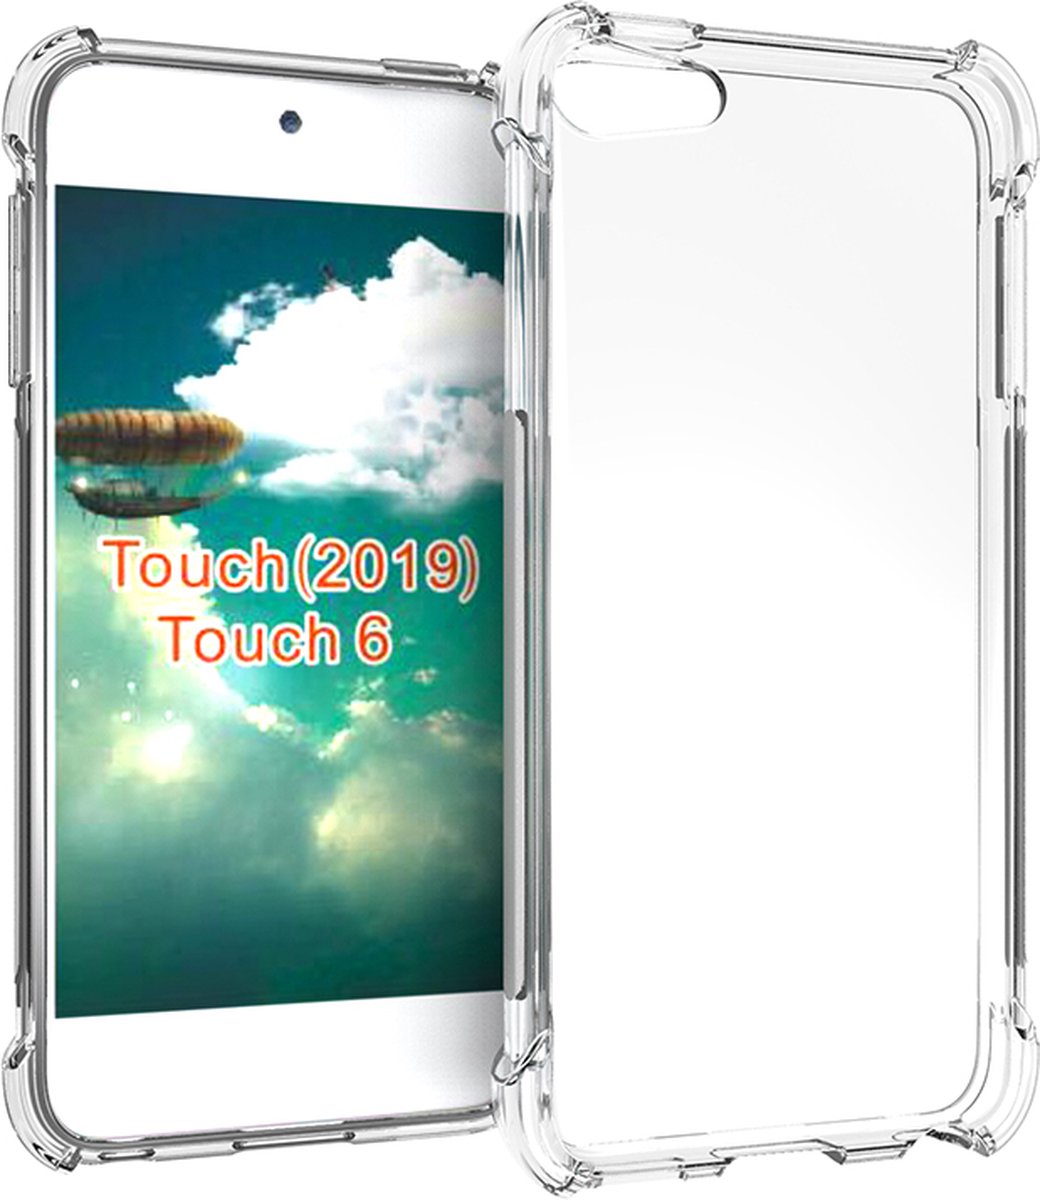 Peachy Antislip Valbestendig TPU Hoes Case voor de iPod Touch 5 iPod Touch 6 iPod Touch 7 - Transparant - Peachy